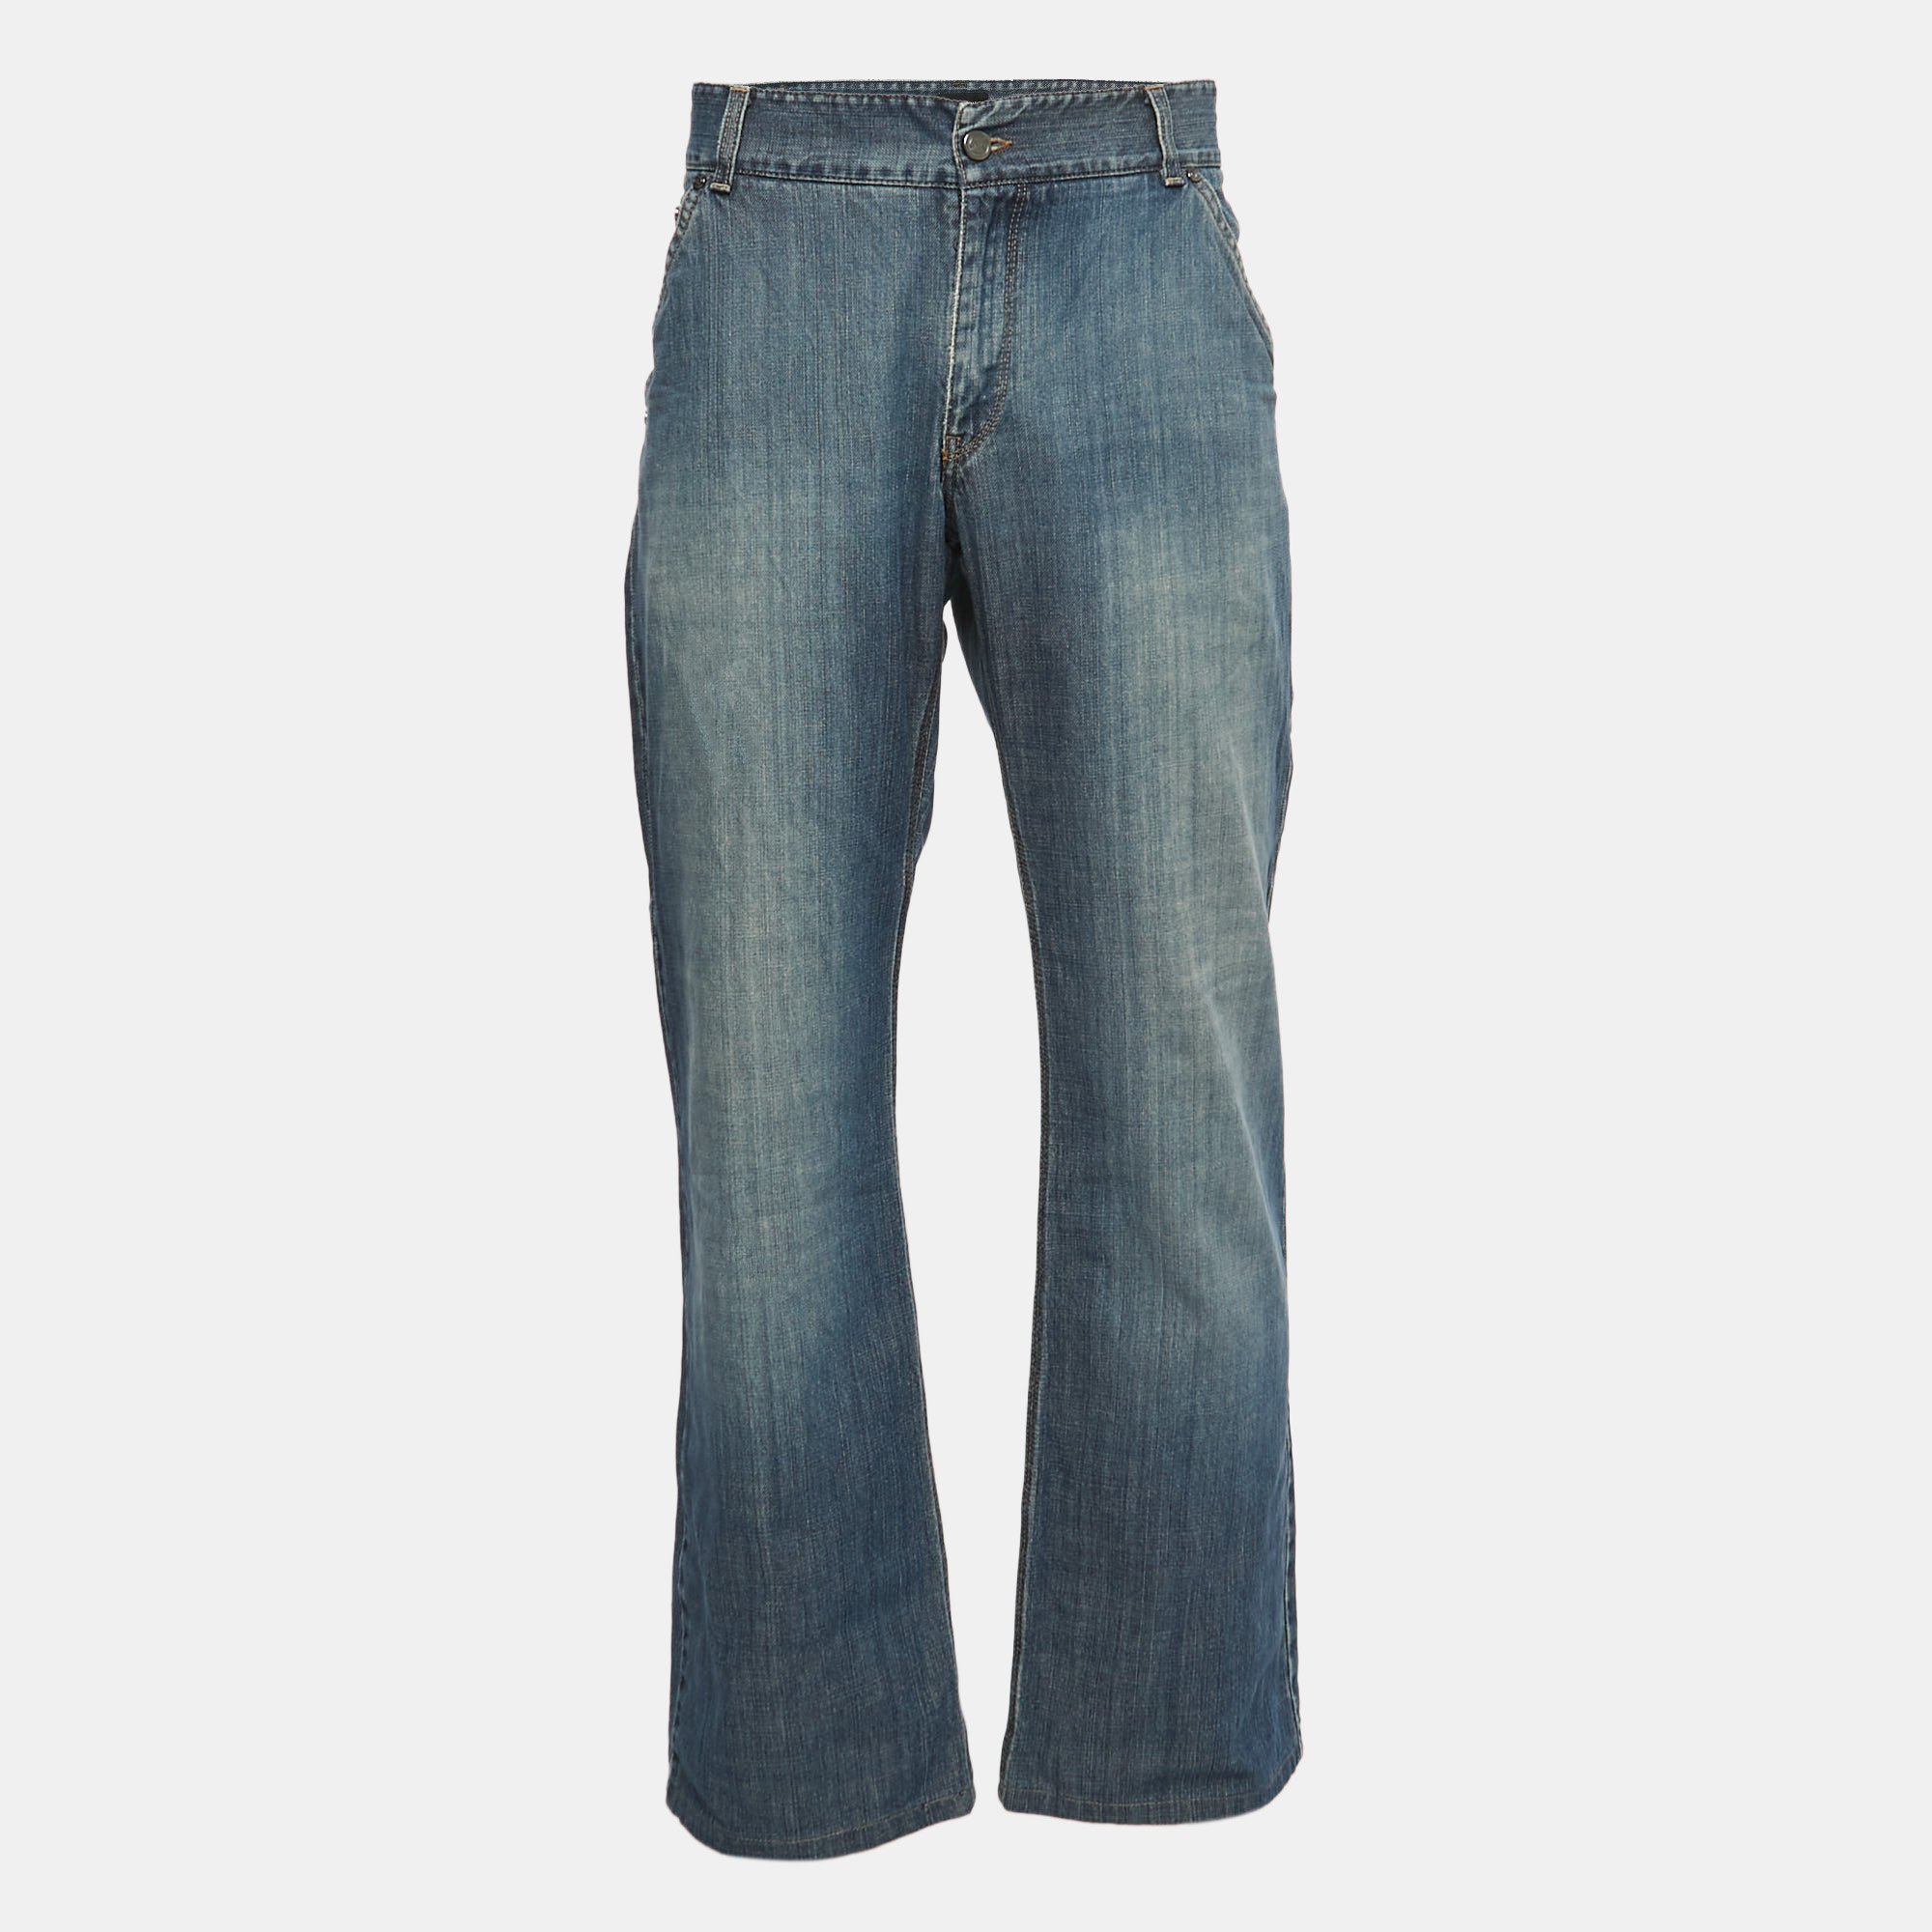 Giorgio armani blue washed denim straight fit jeans 3xl waist 38"